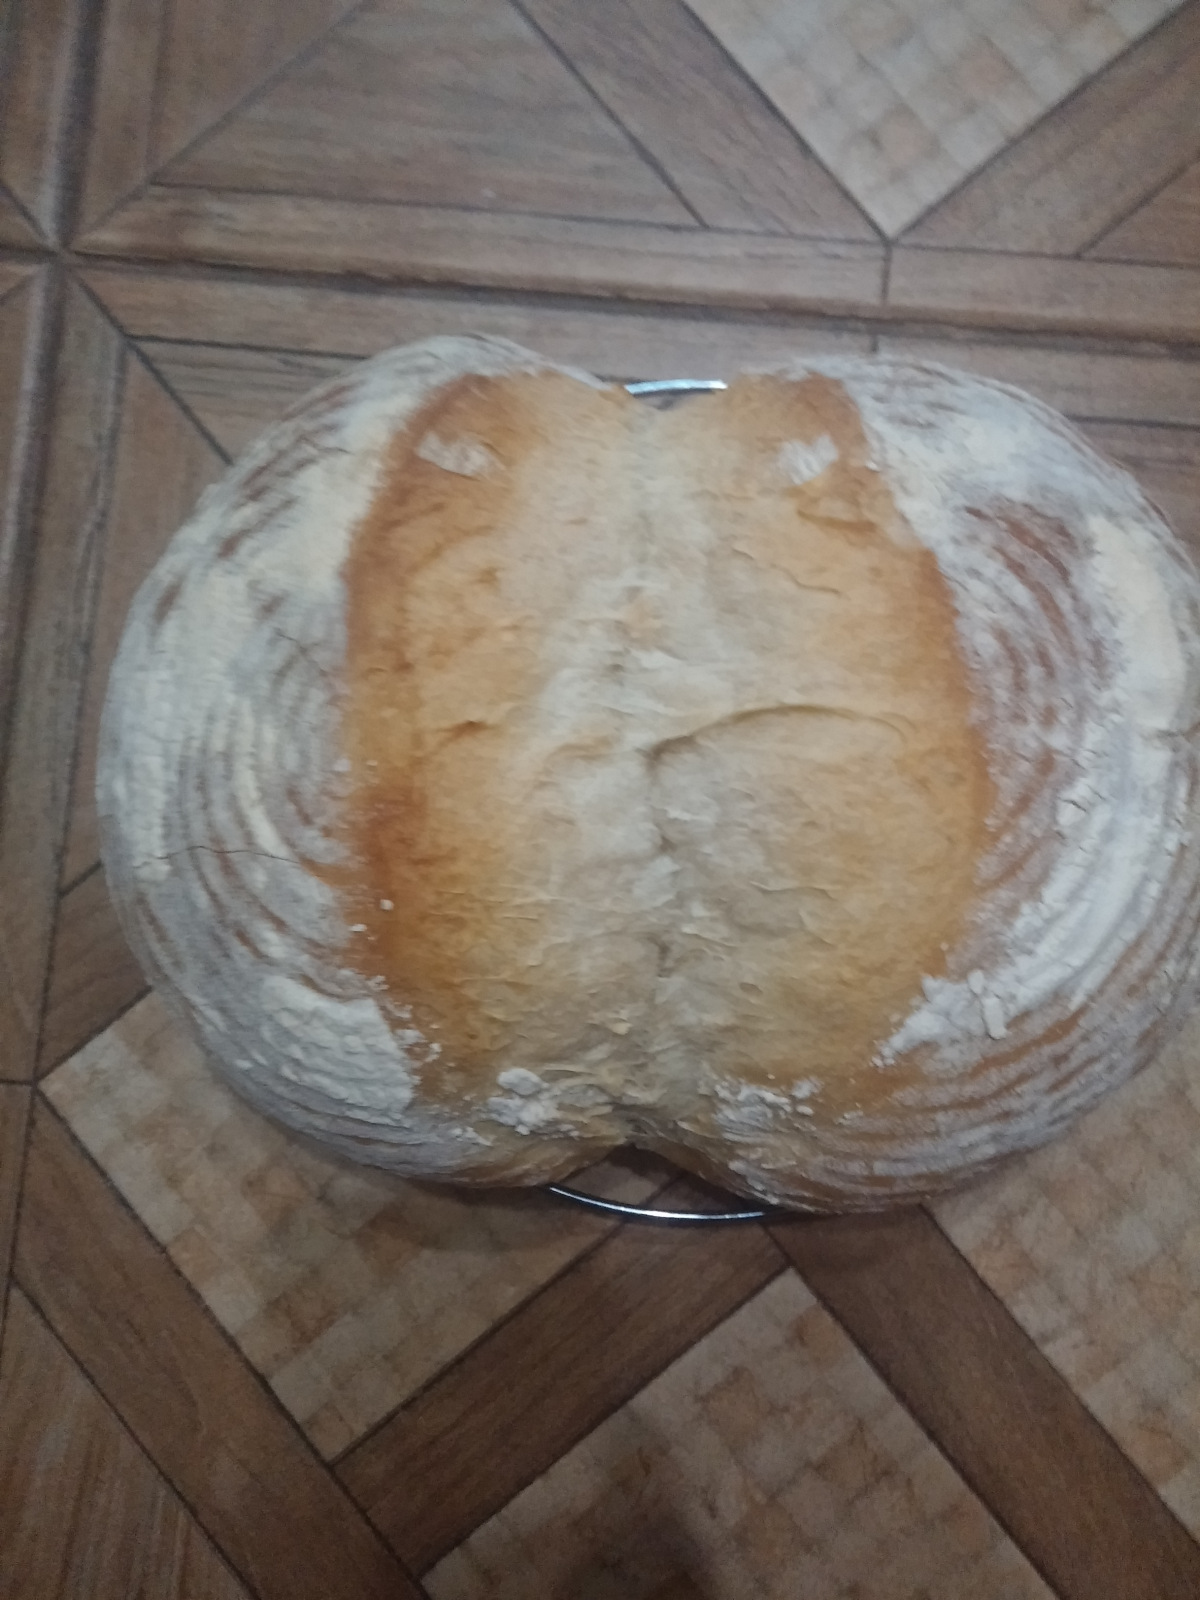 Lucerne bread